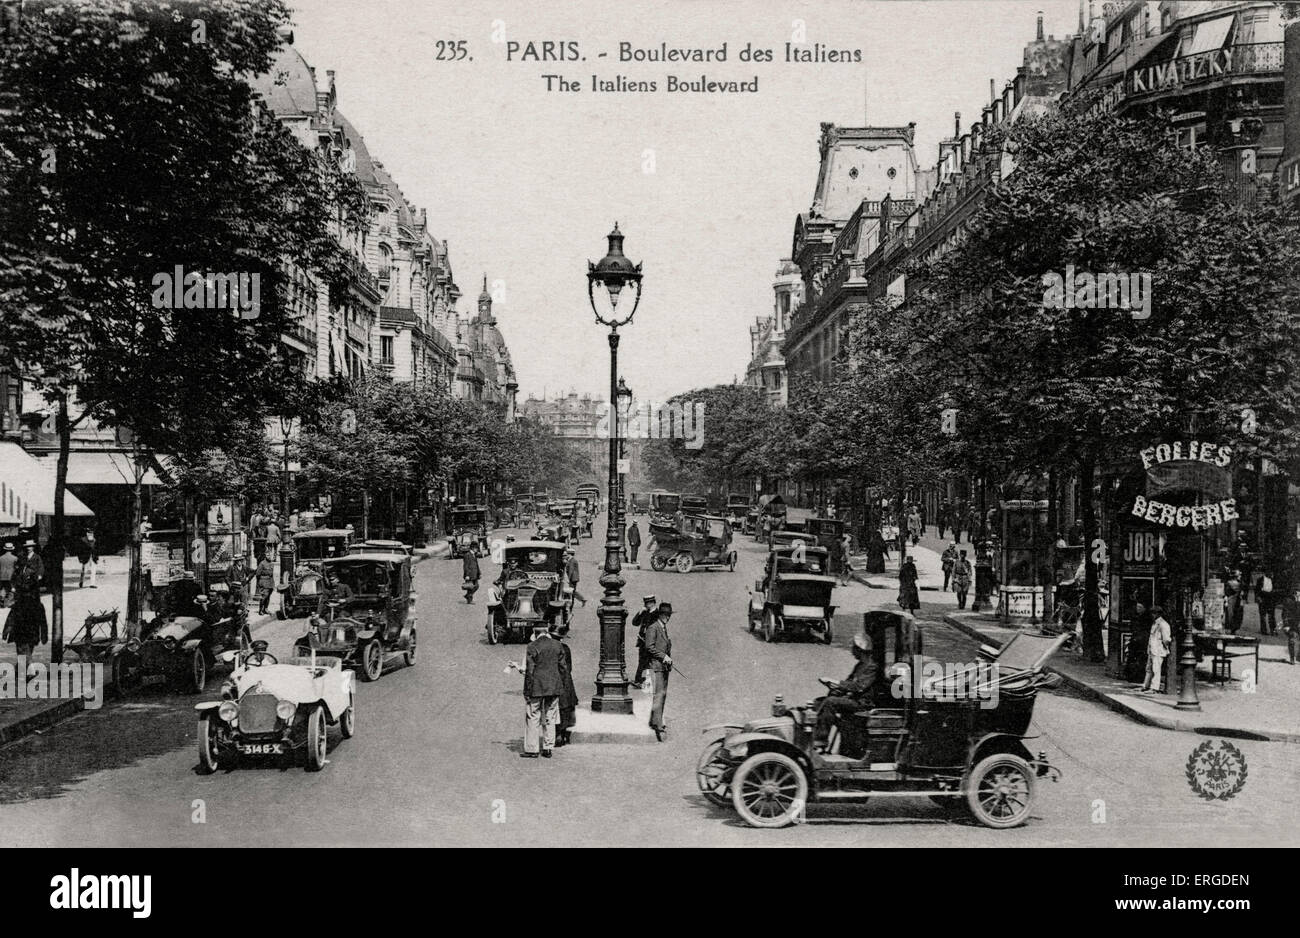 Boulevard des Italiens, Paris - early 20th century Stock Photo